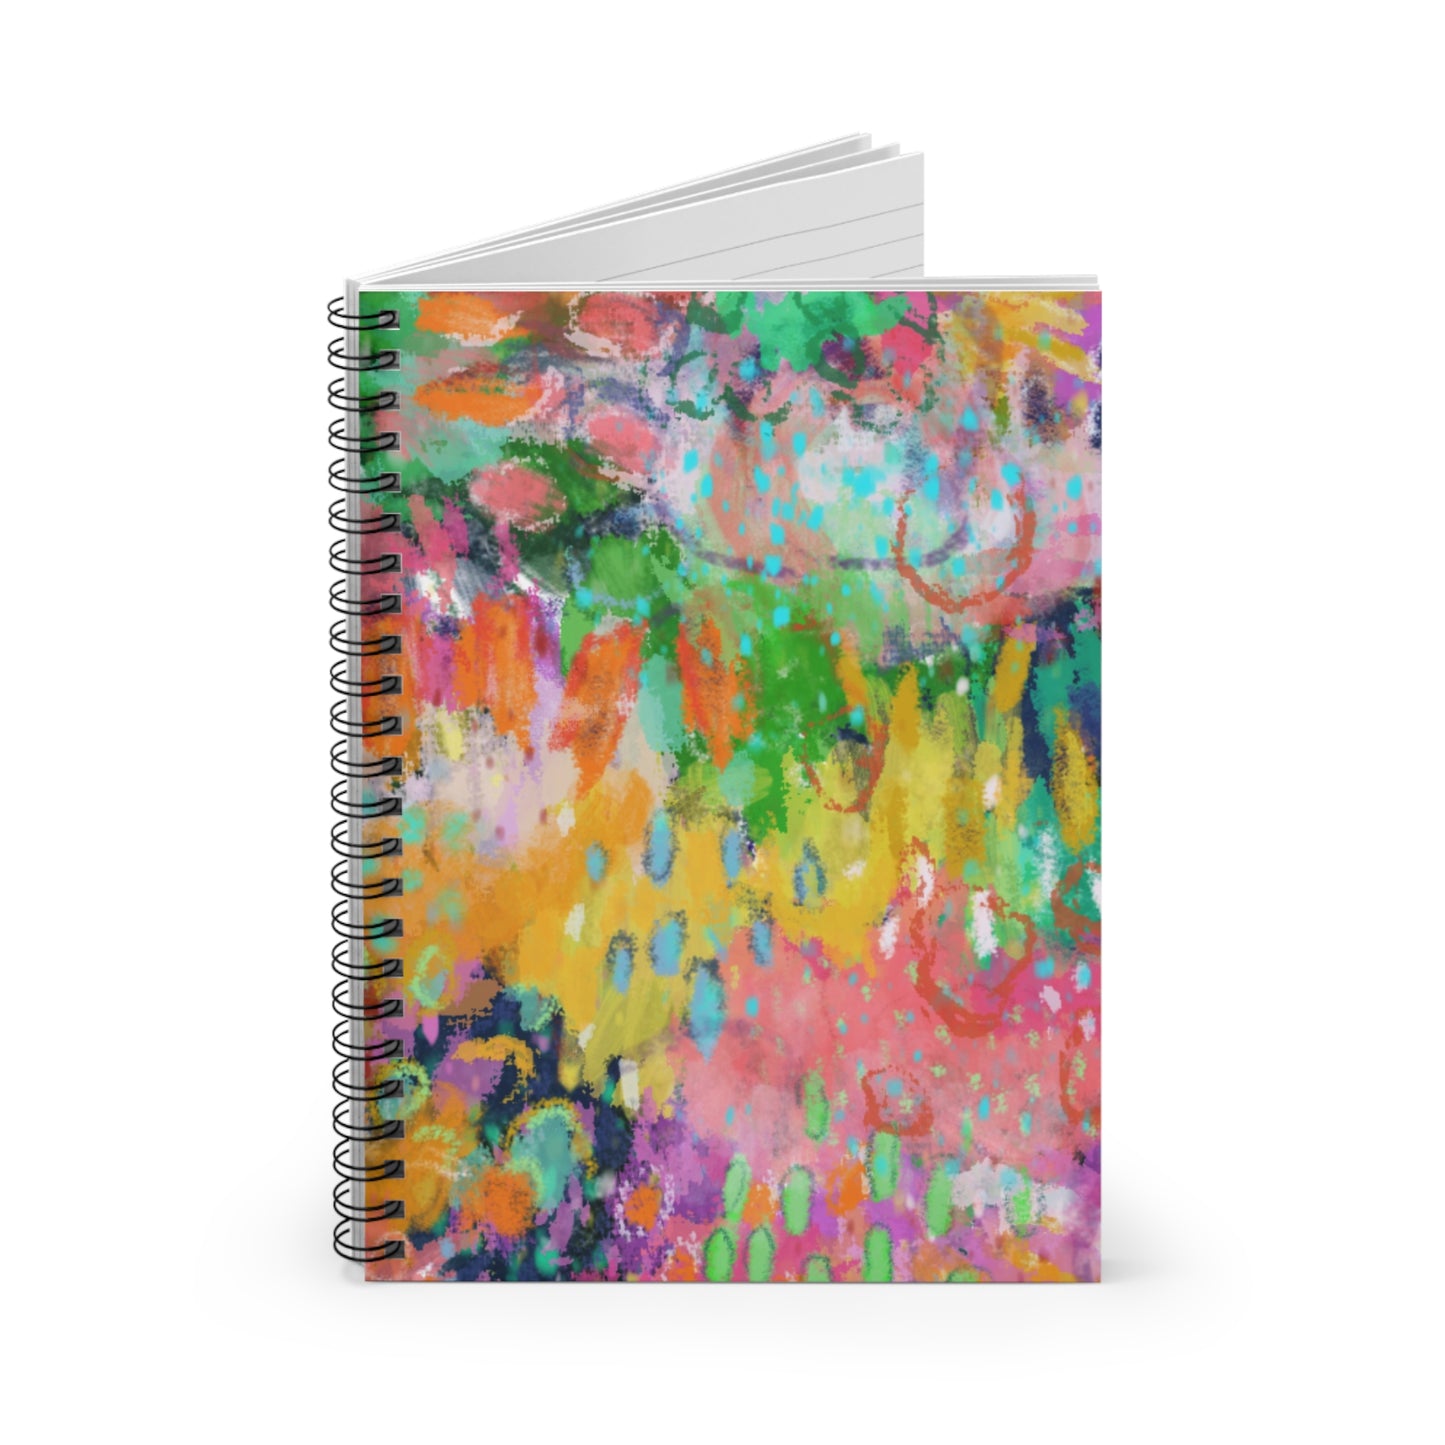 "Bloom" Spiral Notebook - Ruled Line